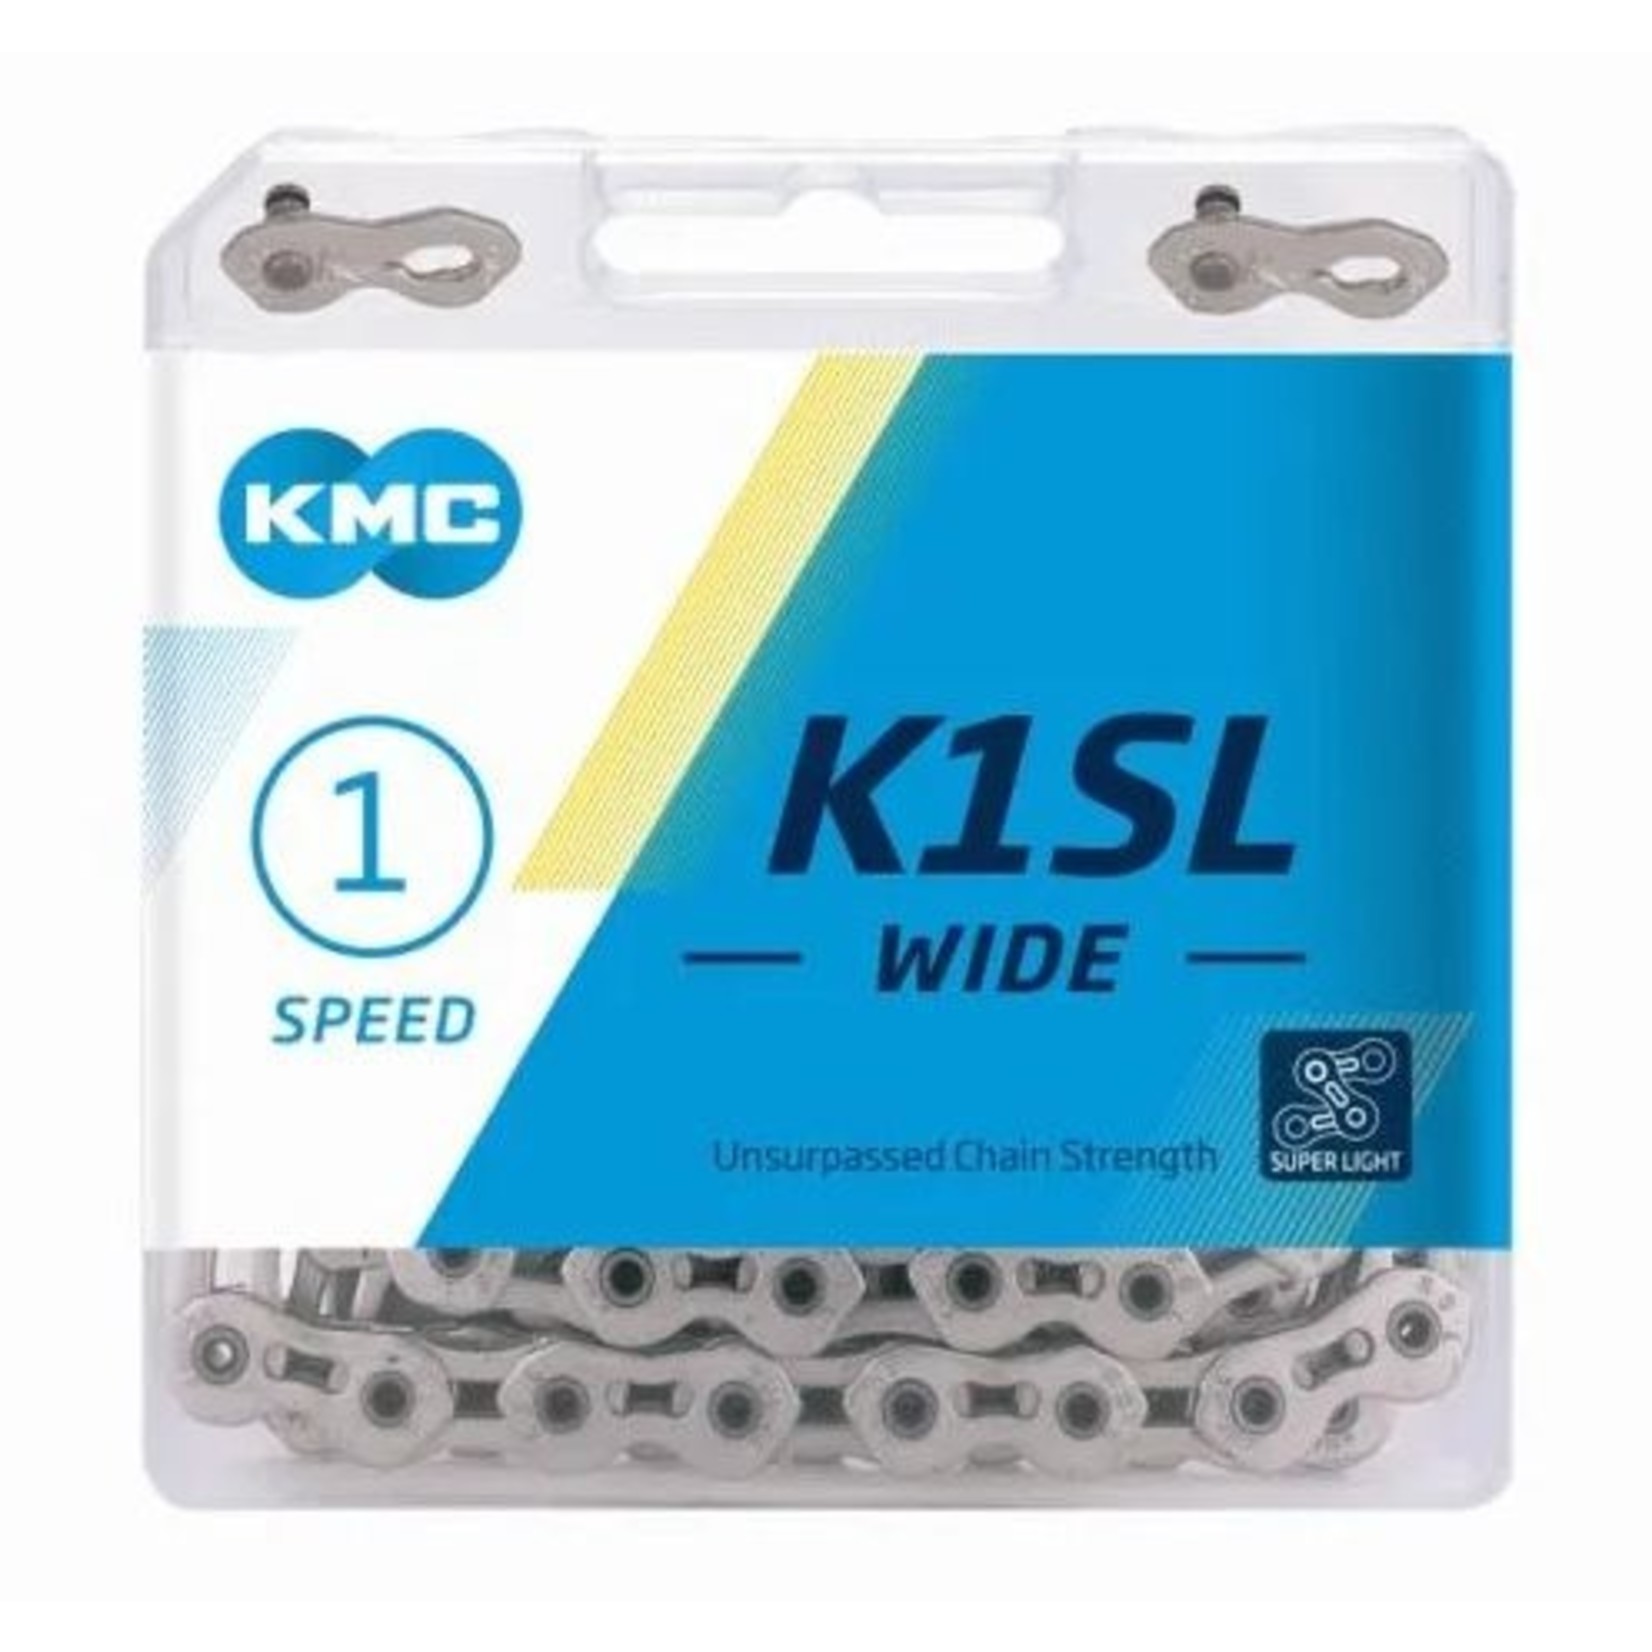 KMC KMC Bike Chain - K1Sl Wide - Single Speed - 1/2 X 1/8" X 112 - Links - Ti-N Gold